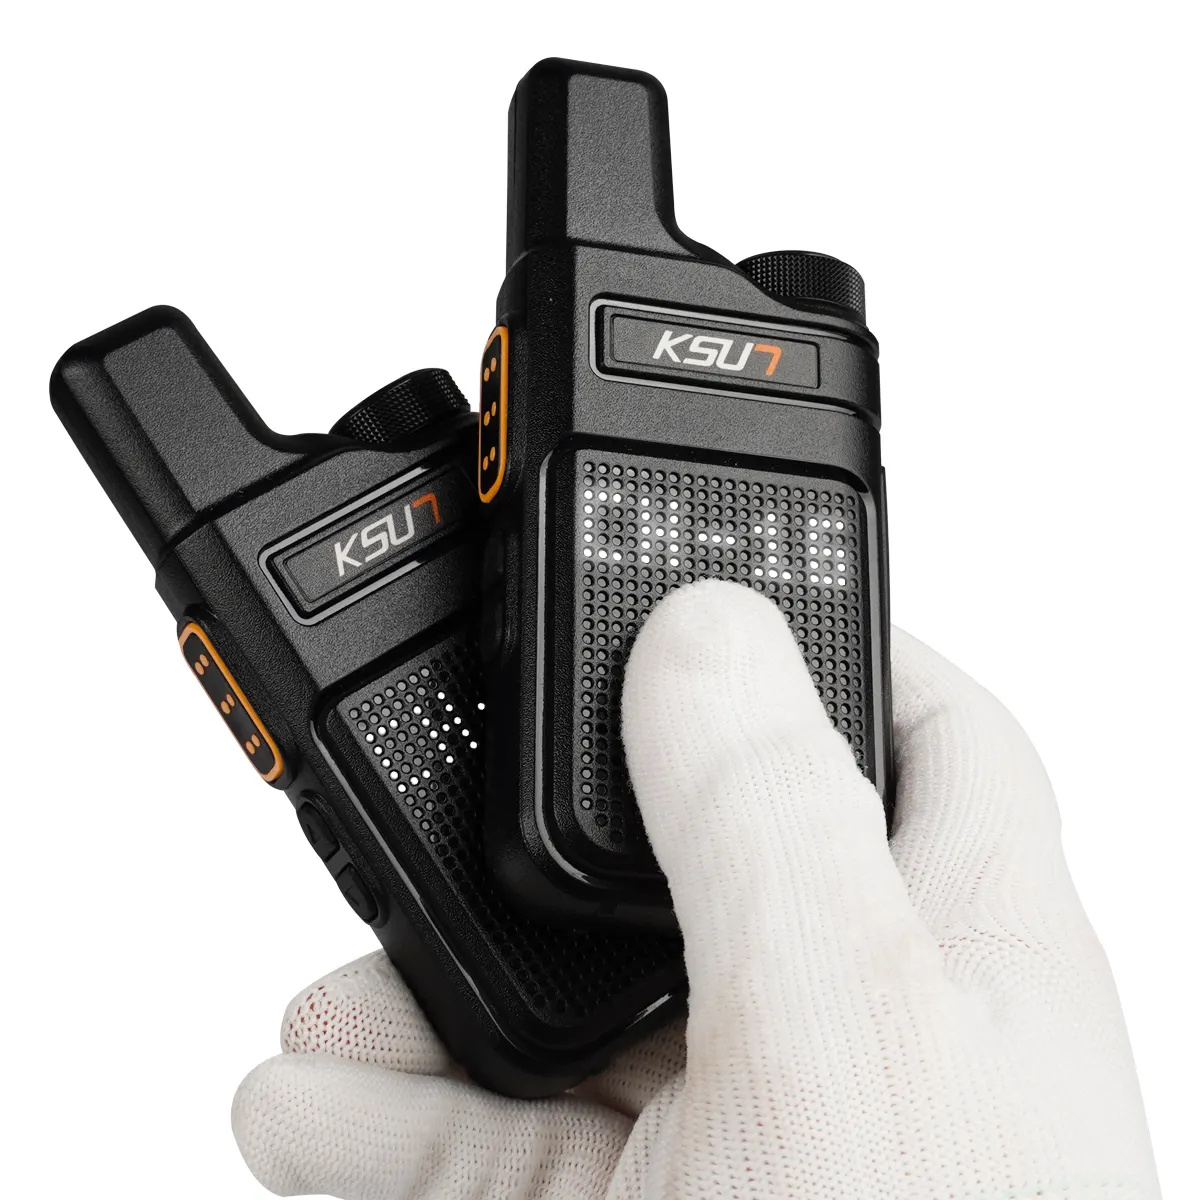 PMR446トランシーバーポータブルミニコミュニケーションラジオプロトランシーバー双方向ラジオトランシーバーKSUTM6品質